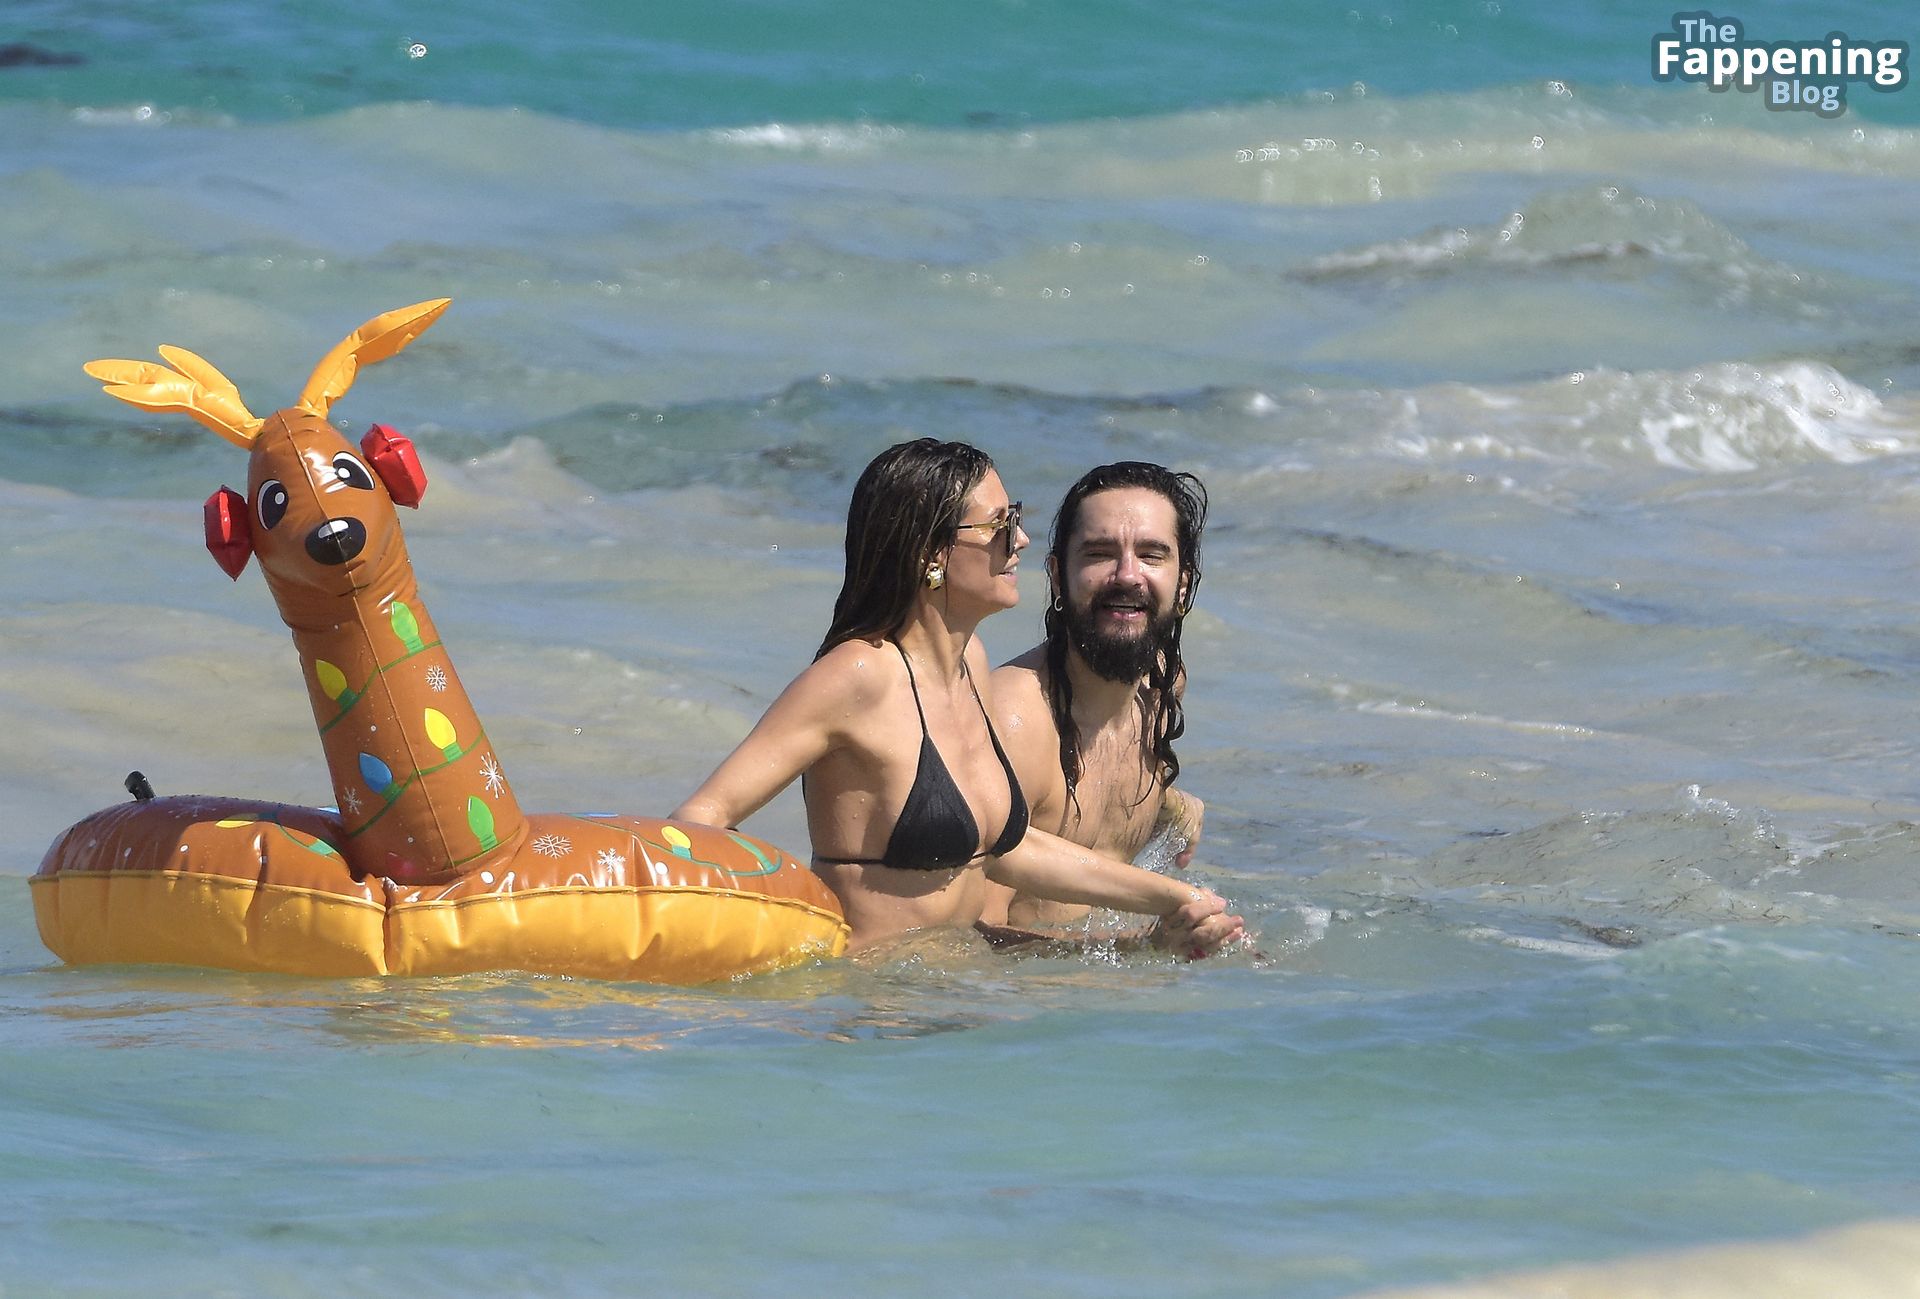 Heidi Klum Shows Off Her Sexy Bikini Body as She Frolics in the Caribbean Waves with Tom Kaulitz (186 Photos)